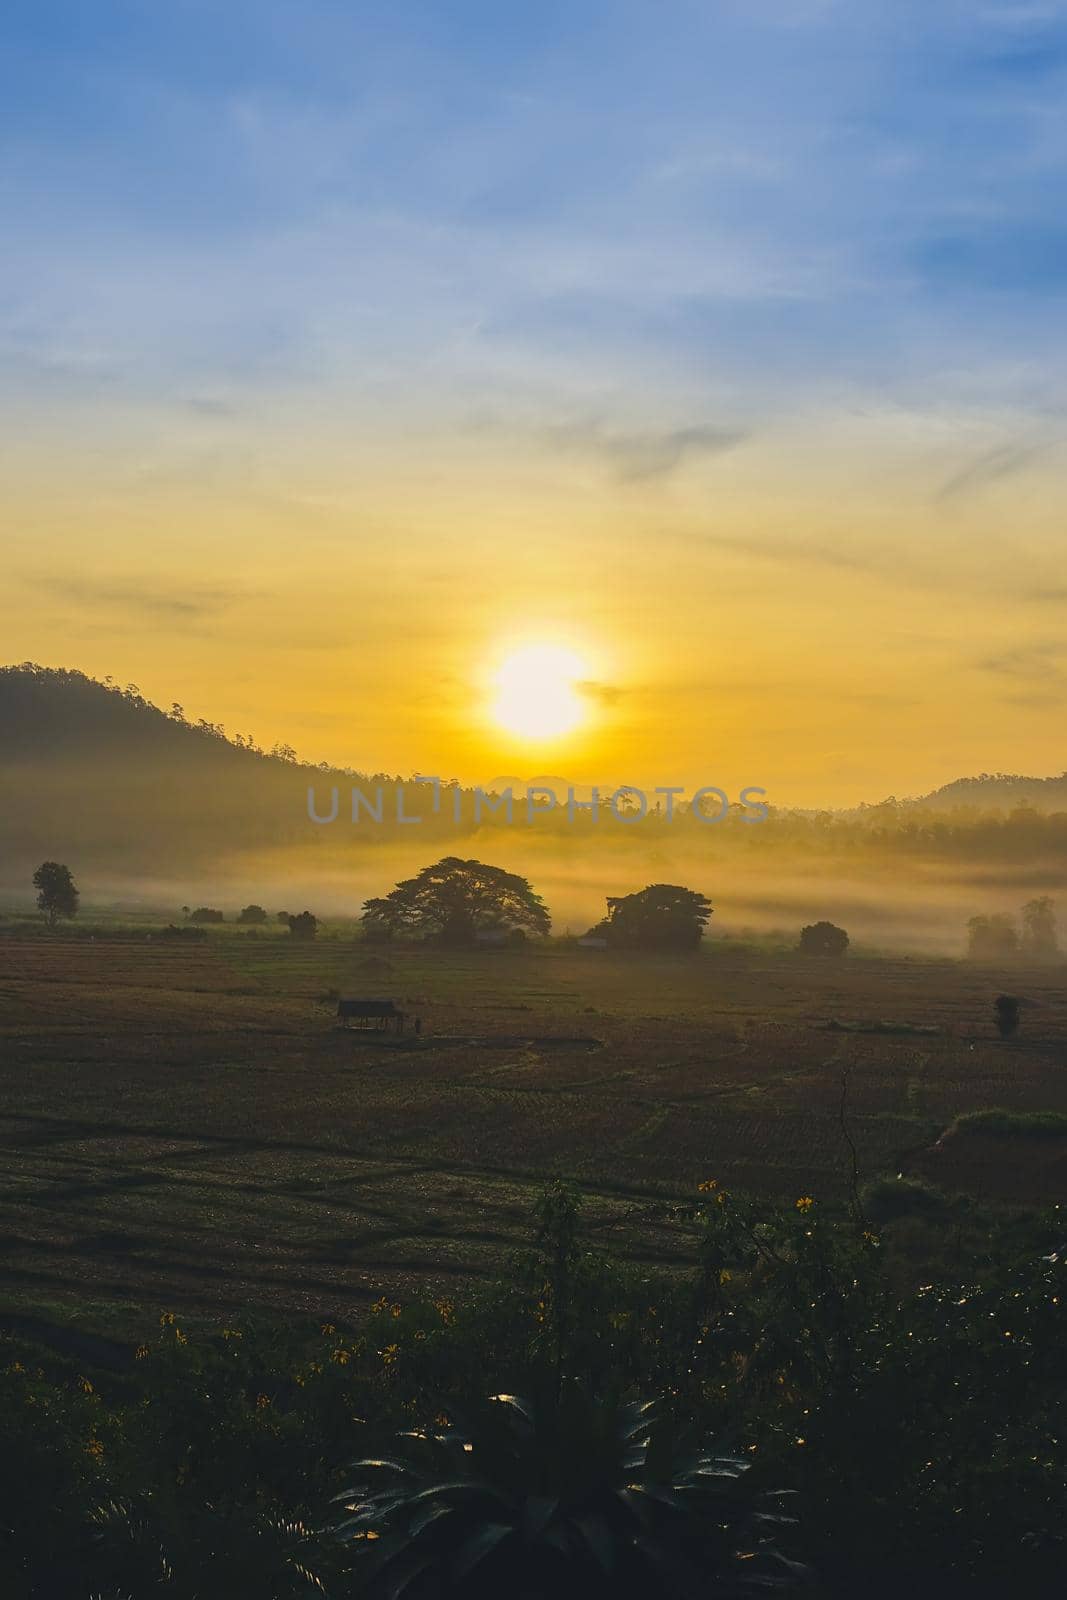 Countryside sunrise at khun yuam district, Mae Hong Son Province, Thailand.